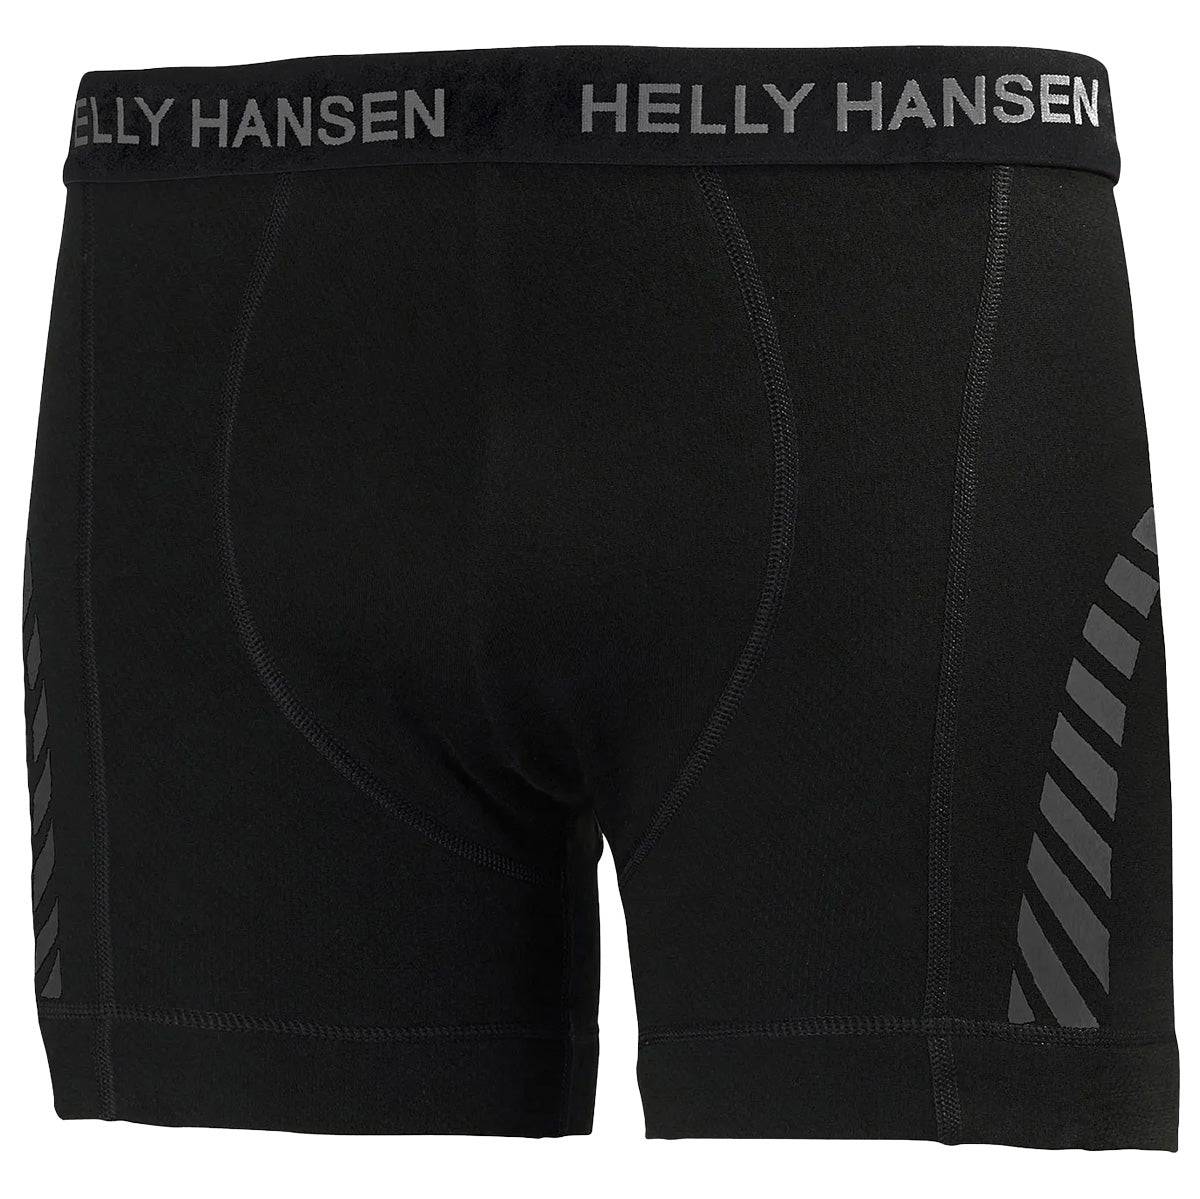 Helly Hansen Mens Lifa Merino Boxer Short Black - John Bull Clothing